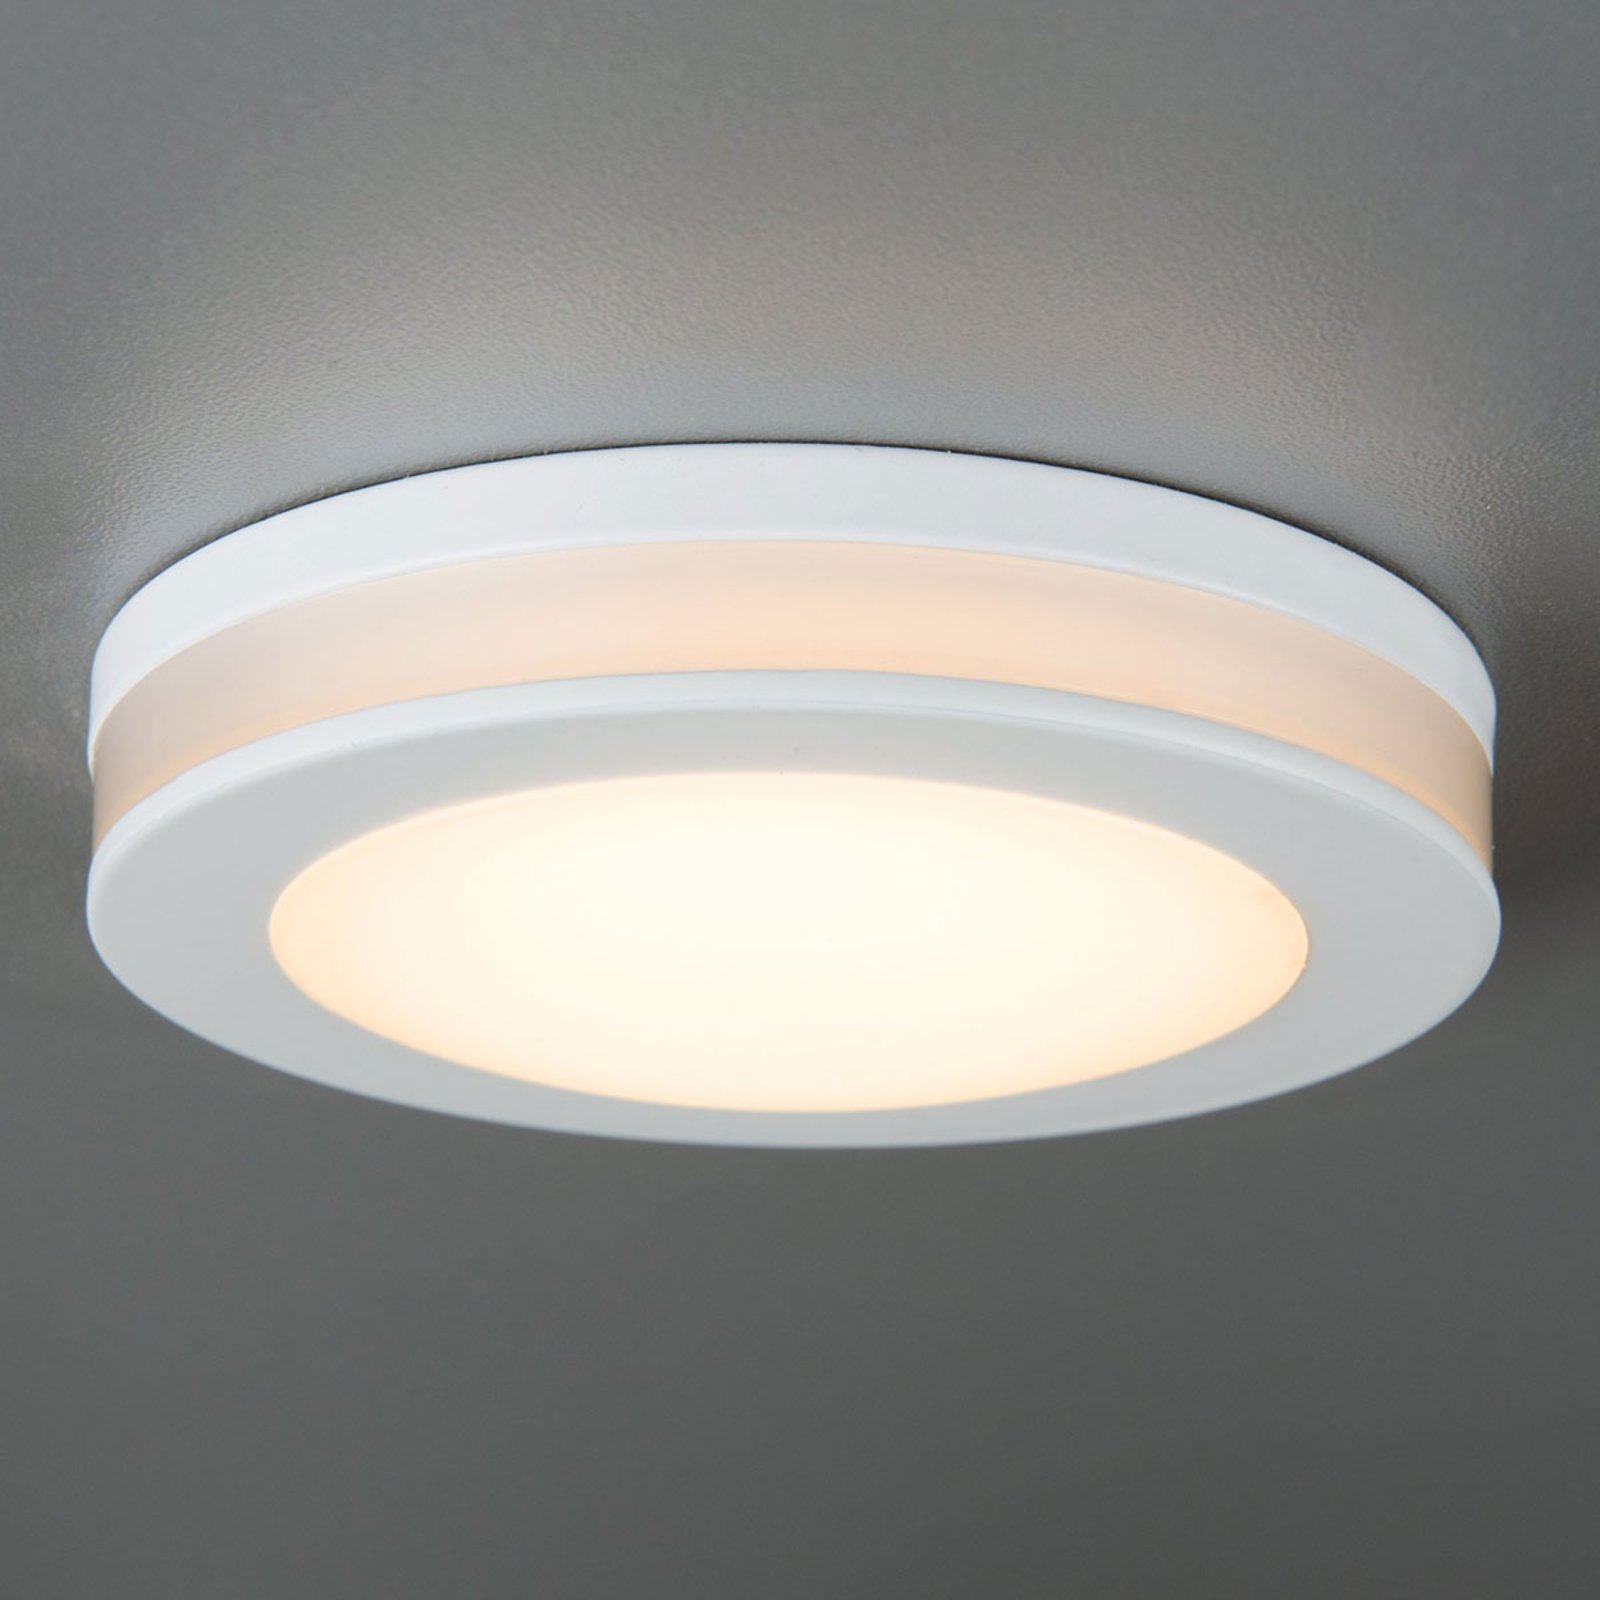 LED inbouwspot Artemis 10 W wit